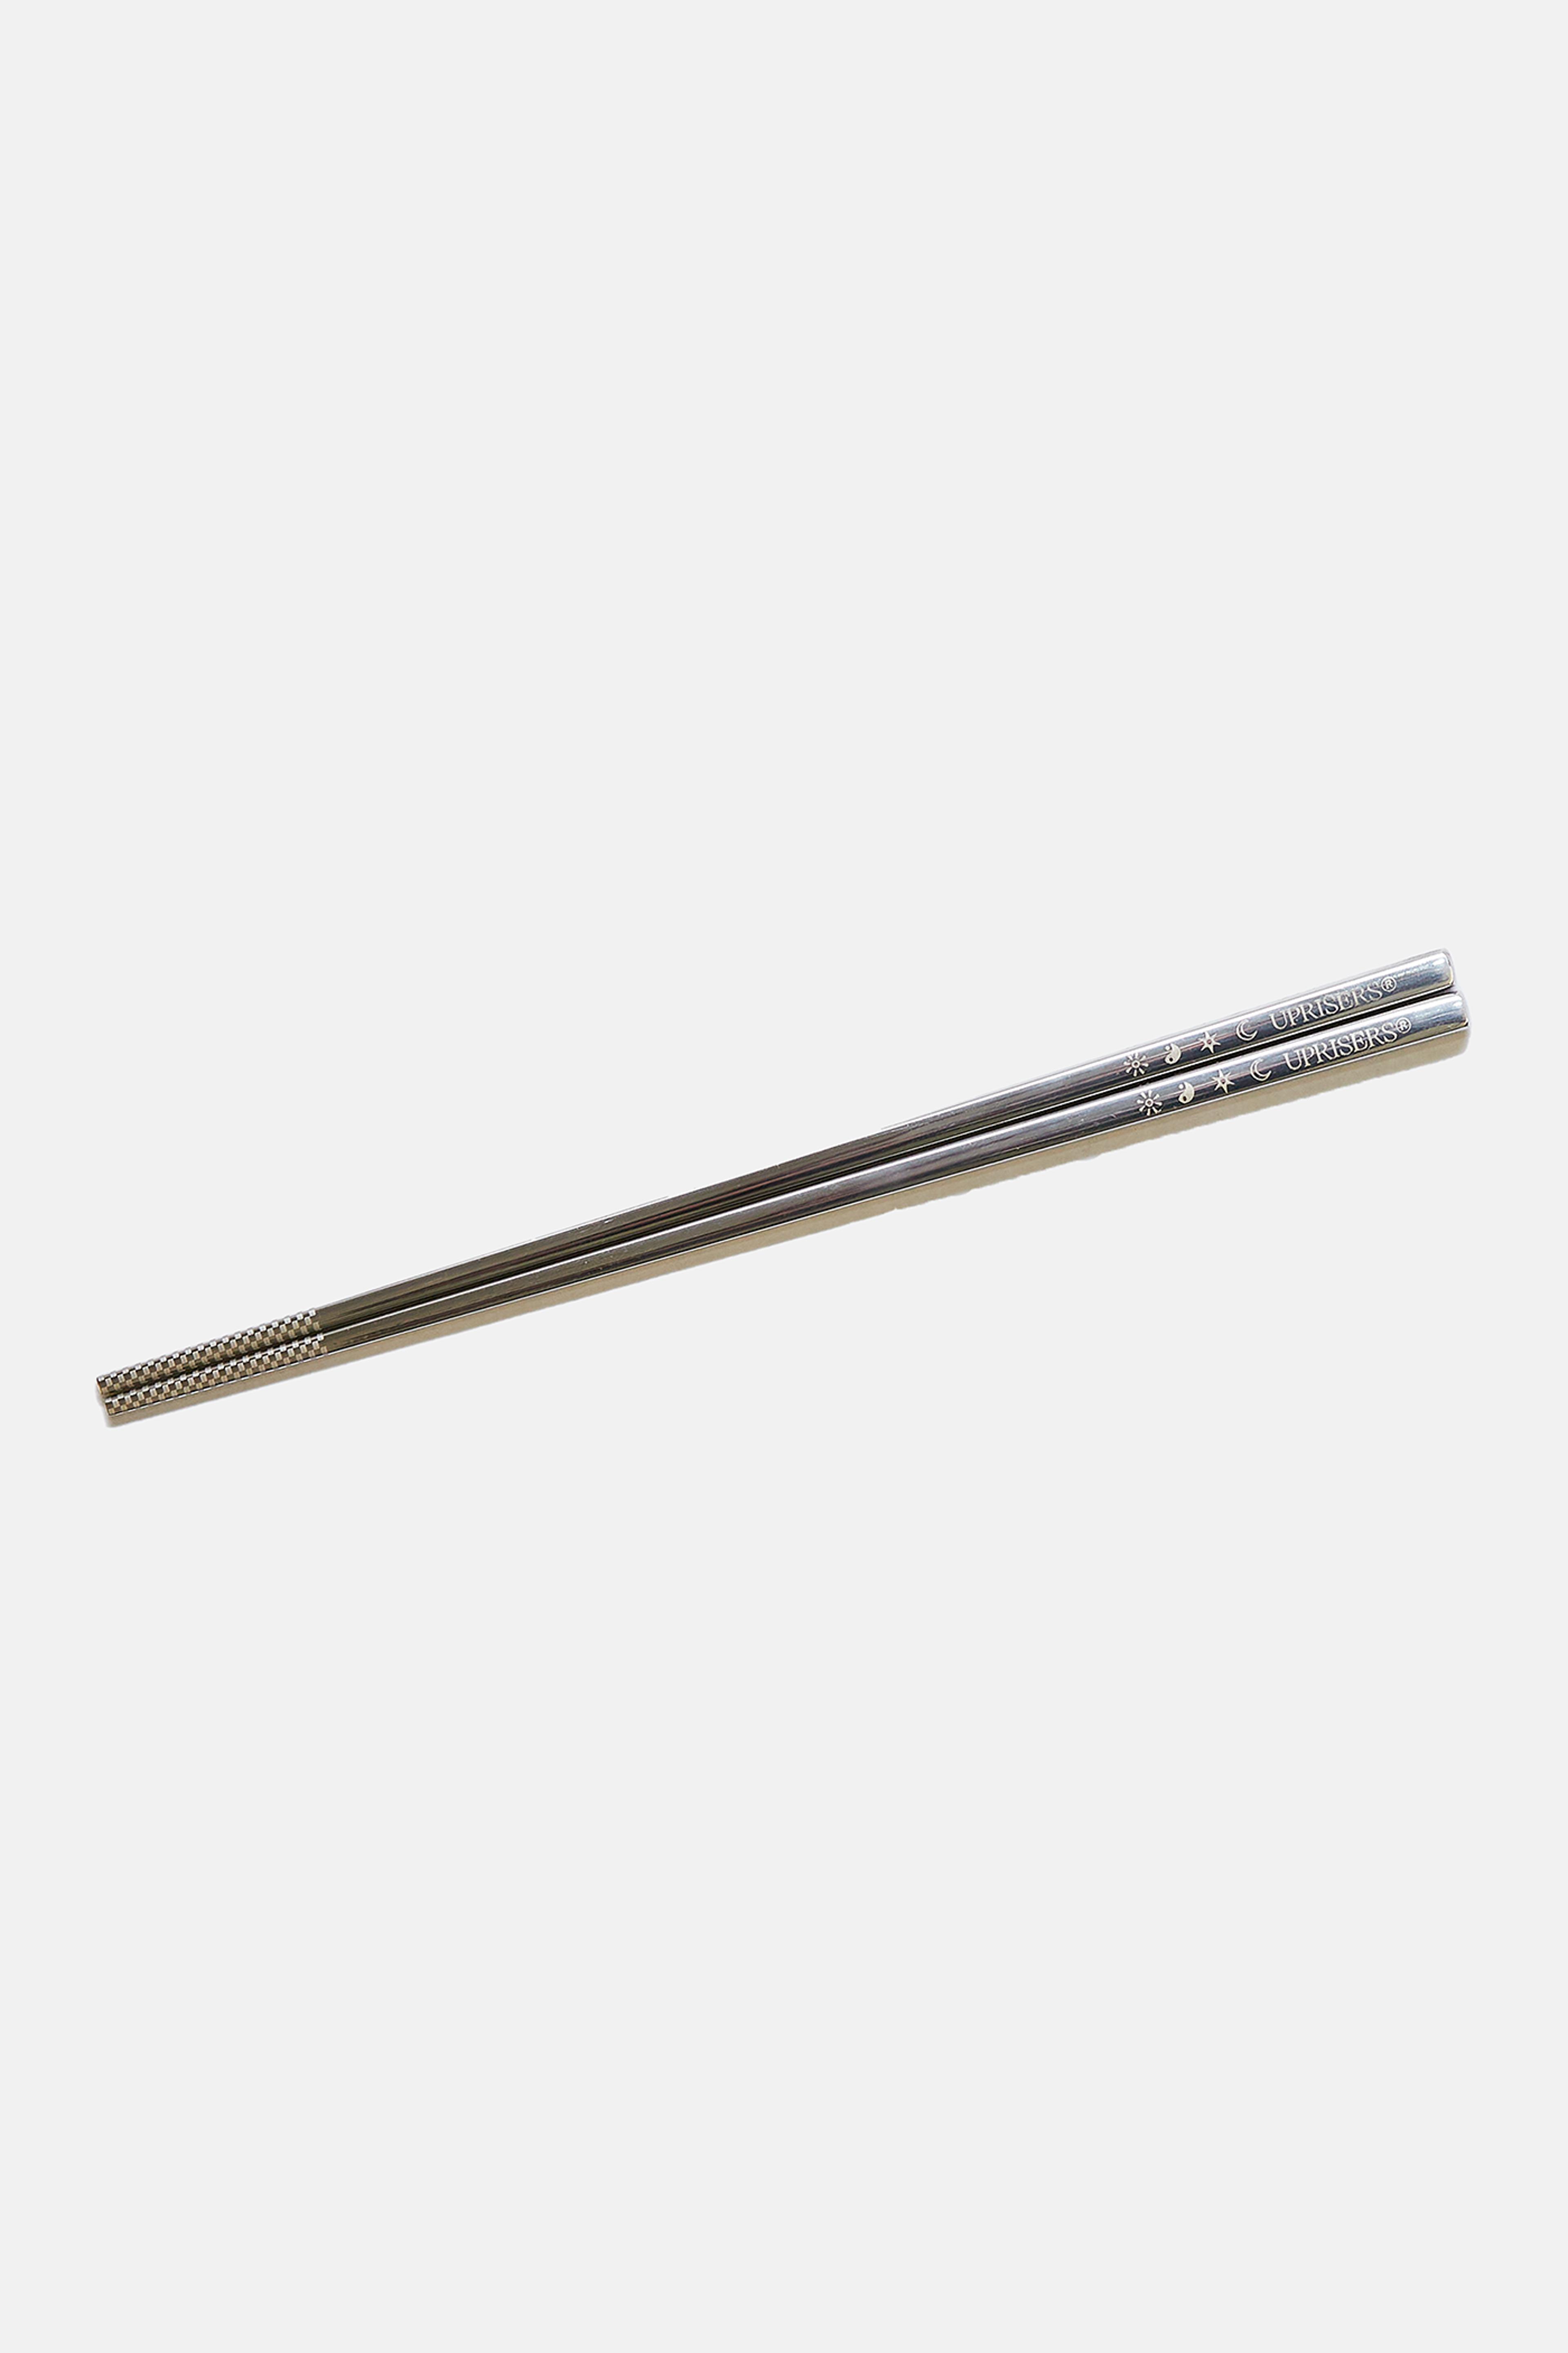 Alternate View 6 of UPRISERS Stainless Steel Chopsticks